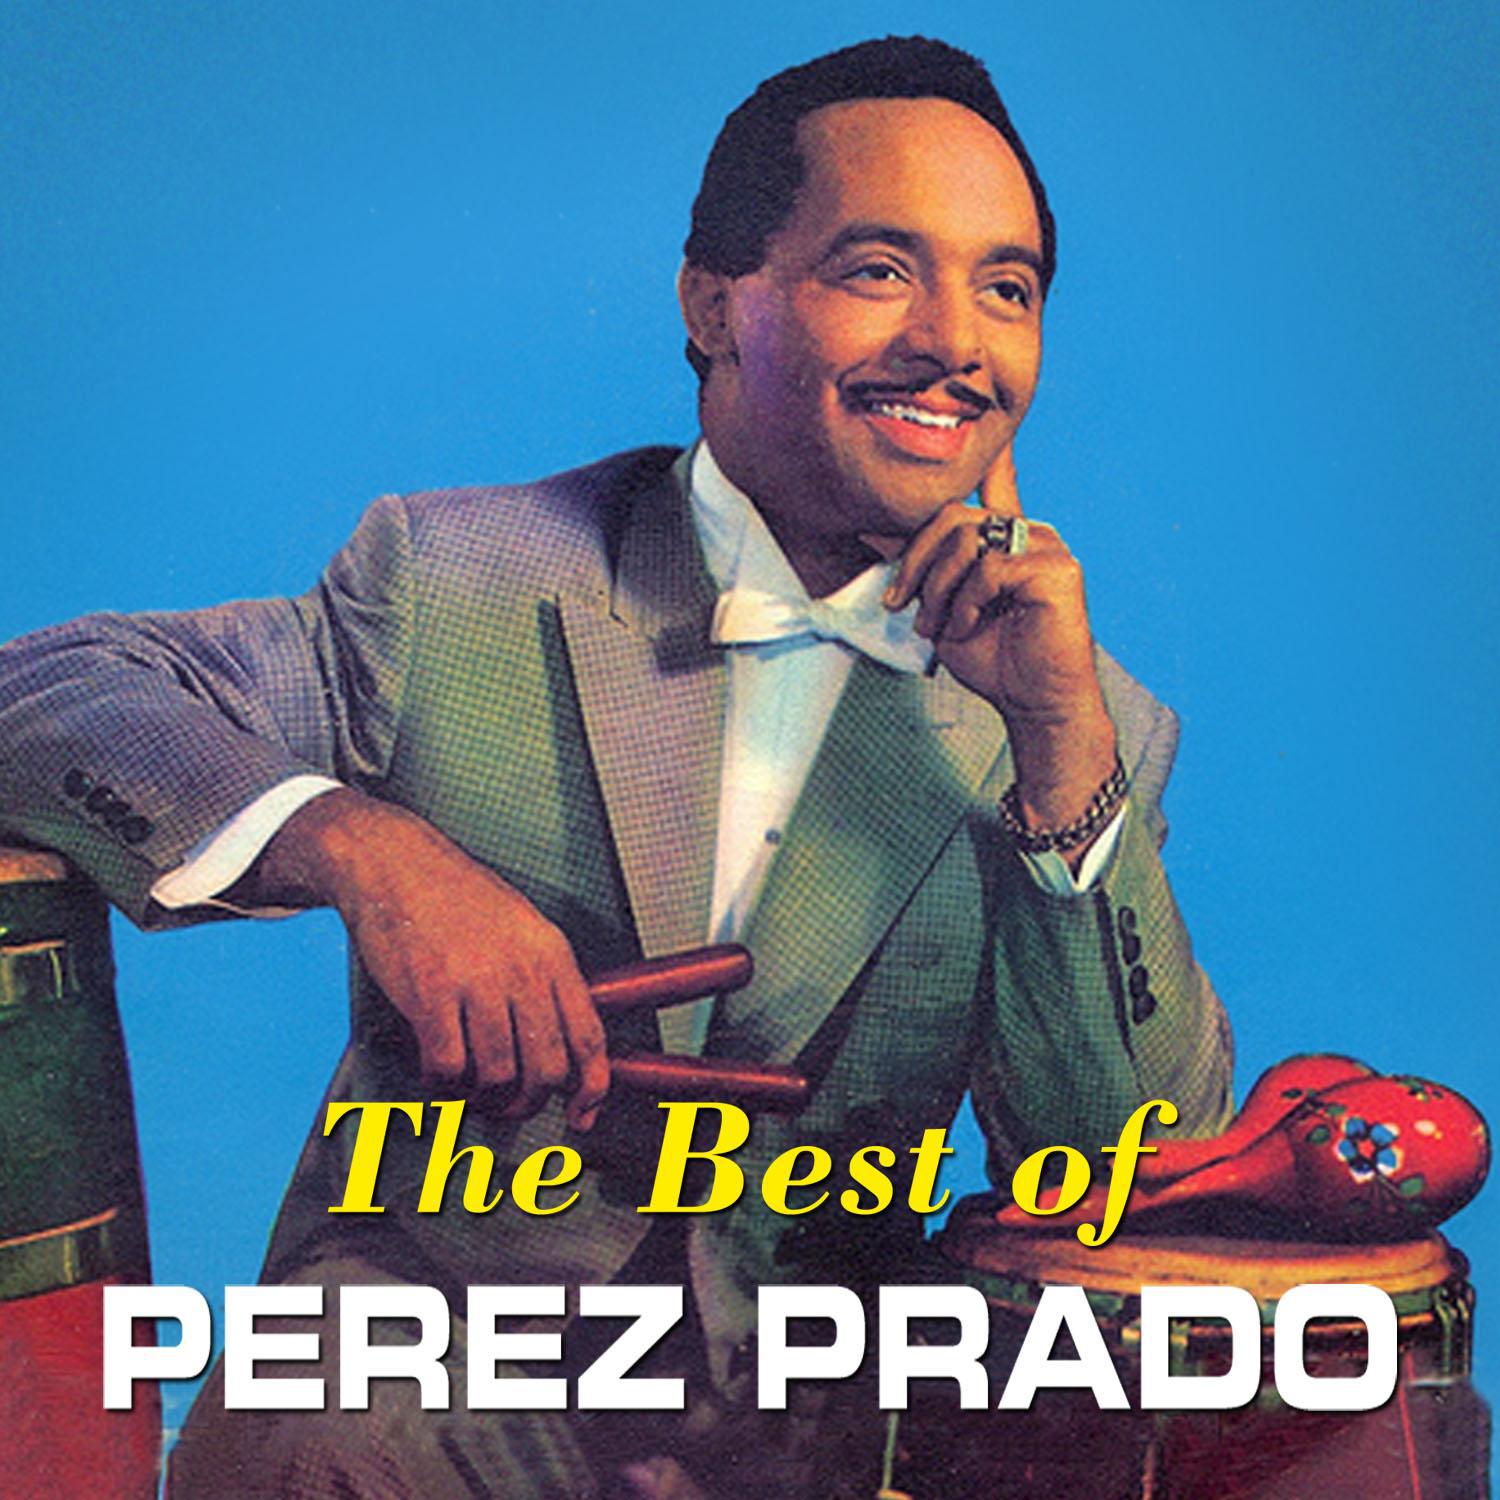 The Best of Perez Prado